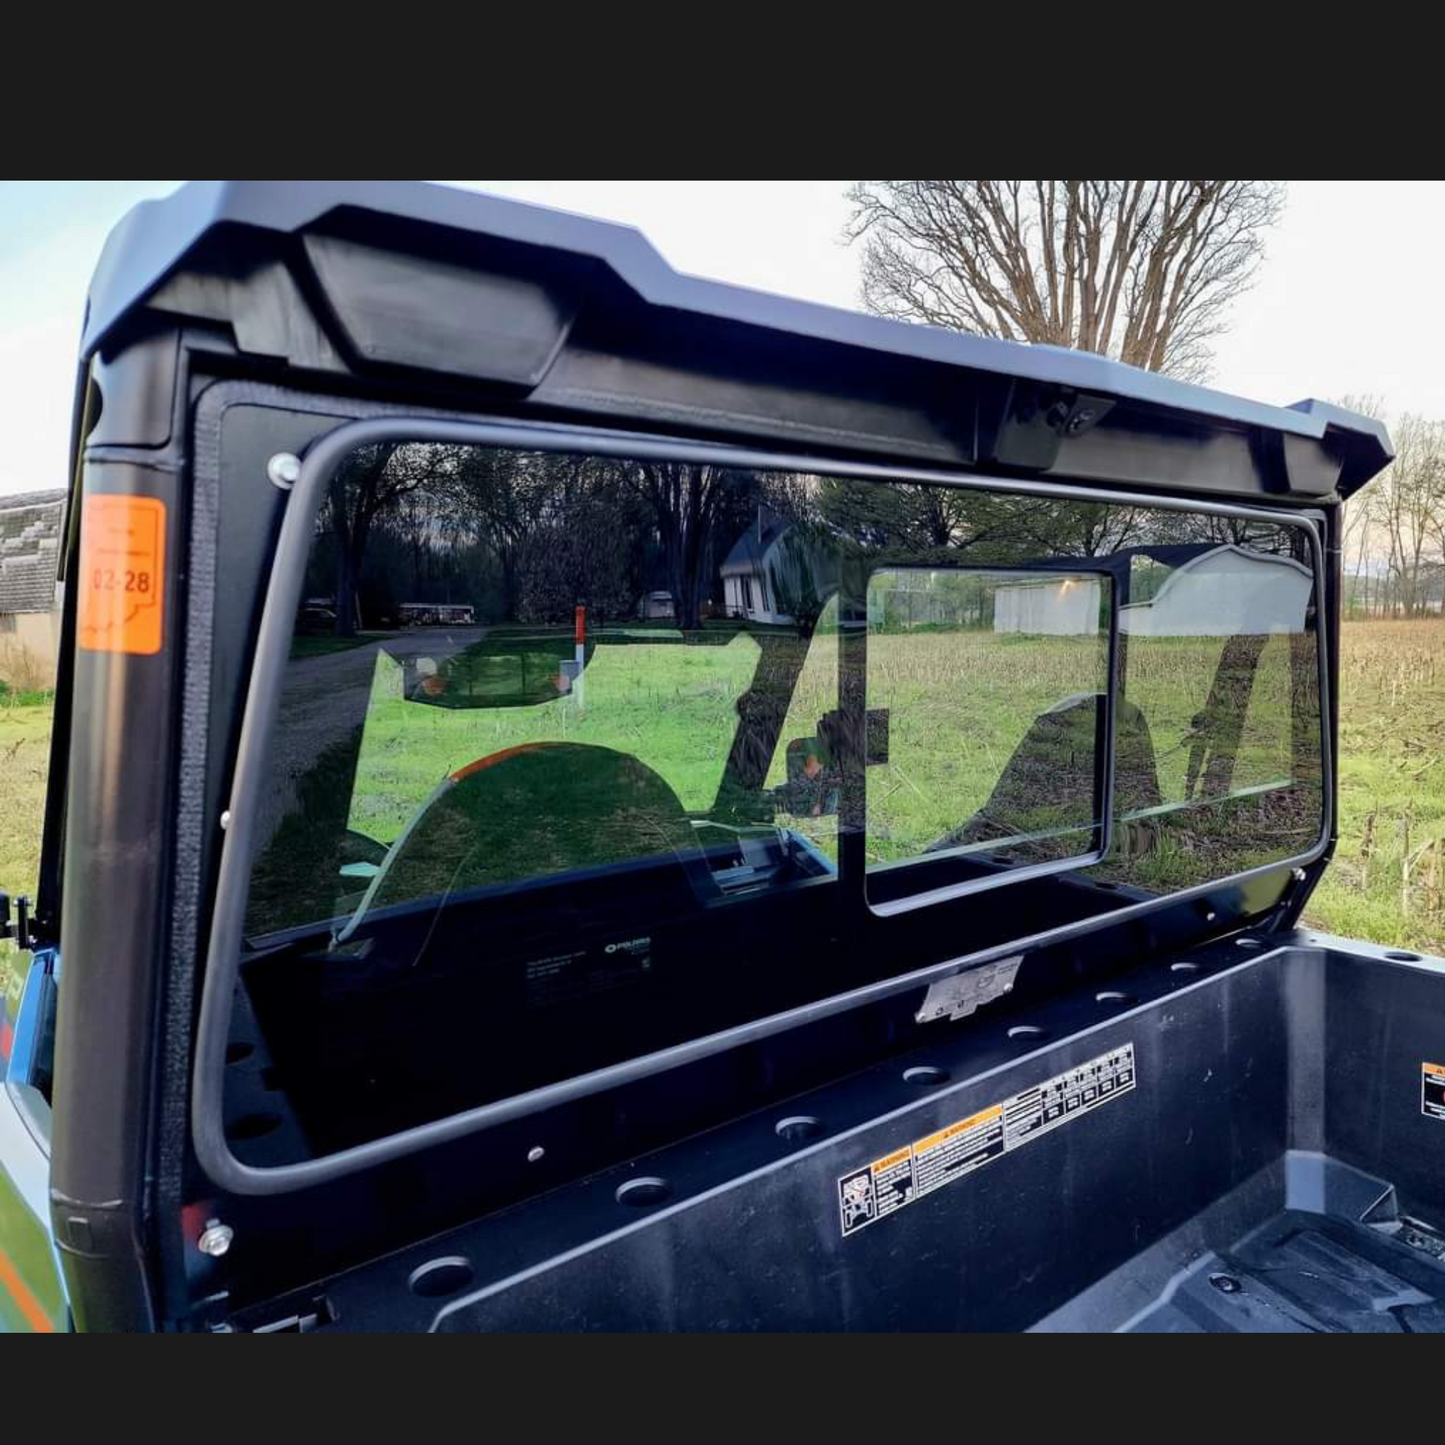 Polaris General BYOW Rear Sliding Window Frame Kit